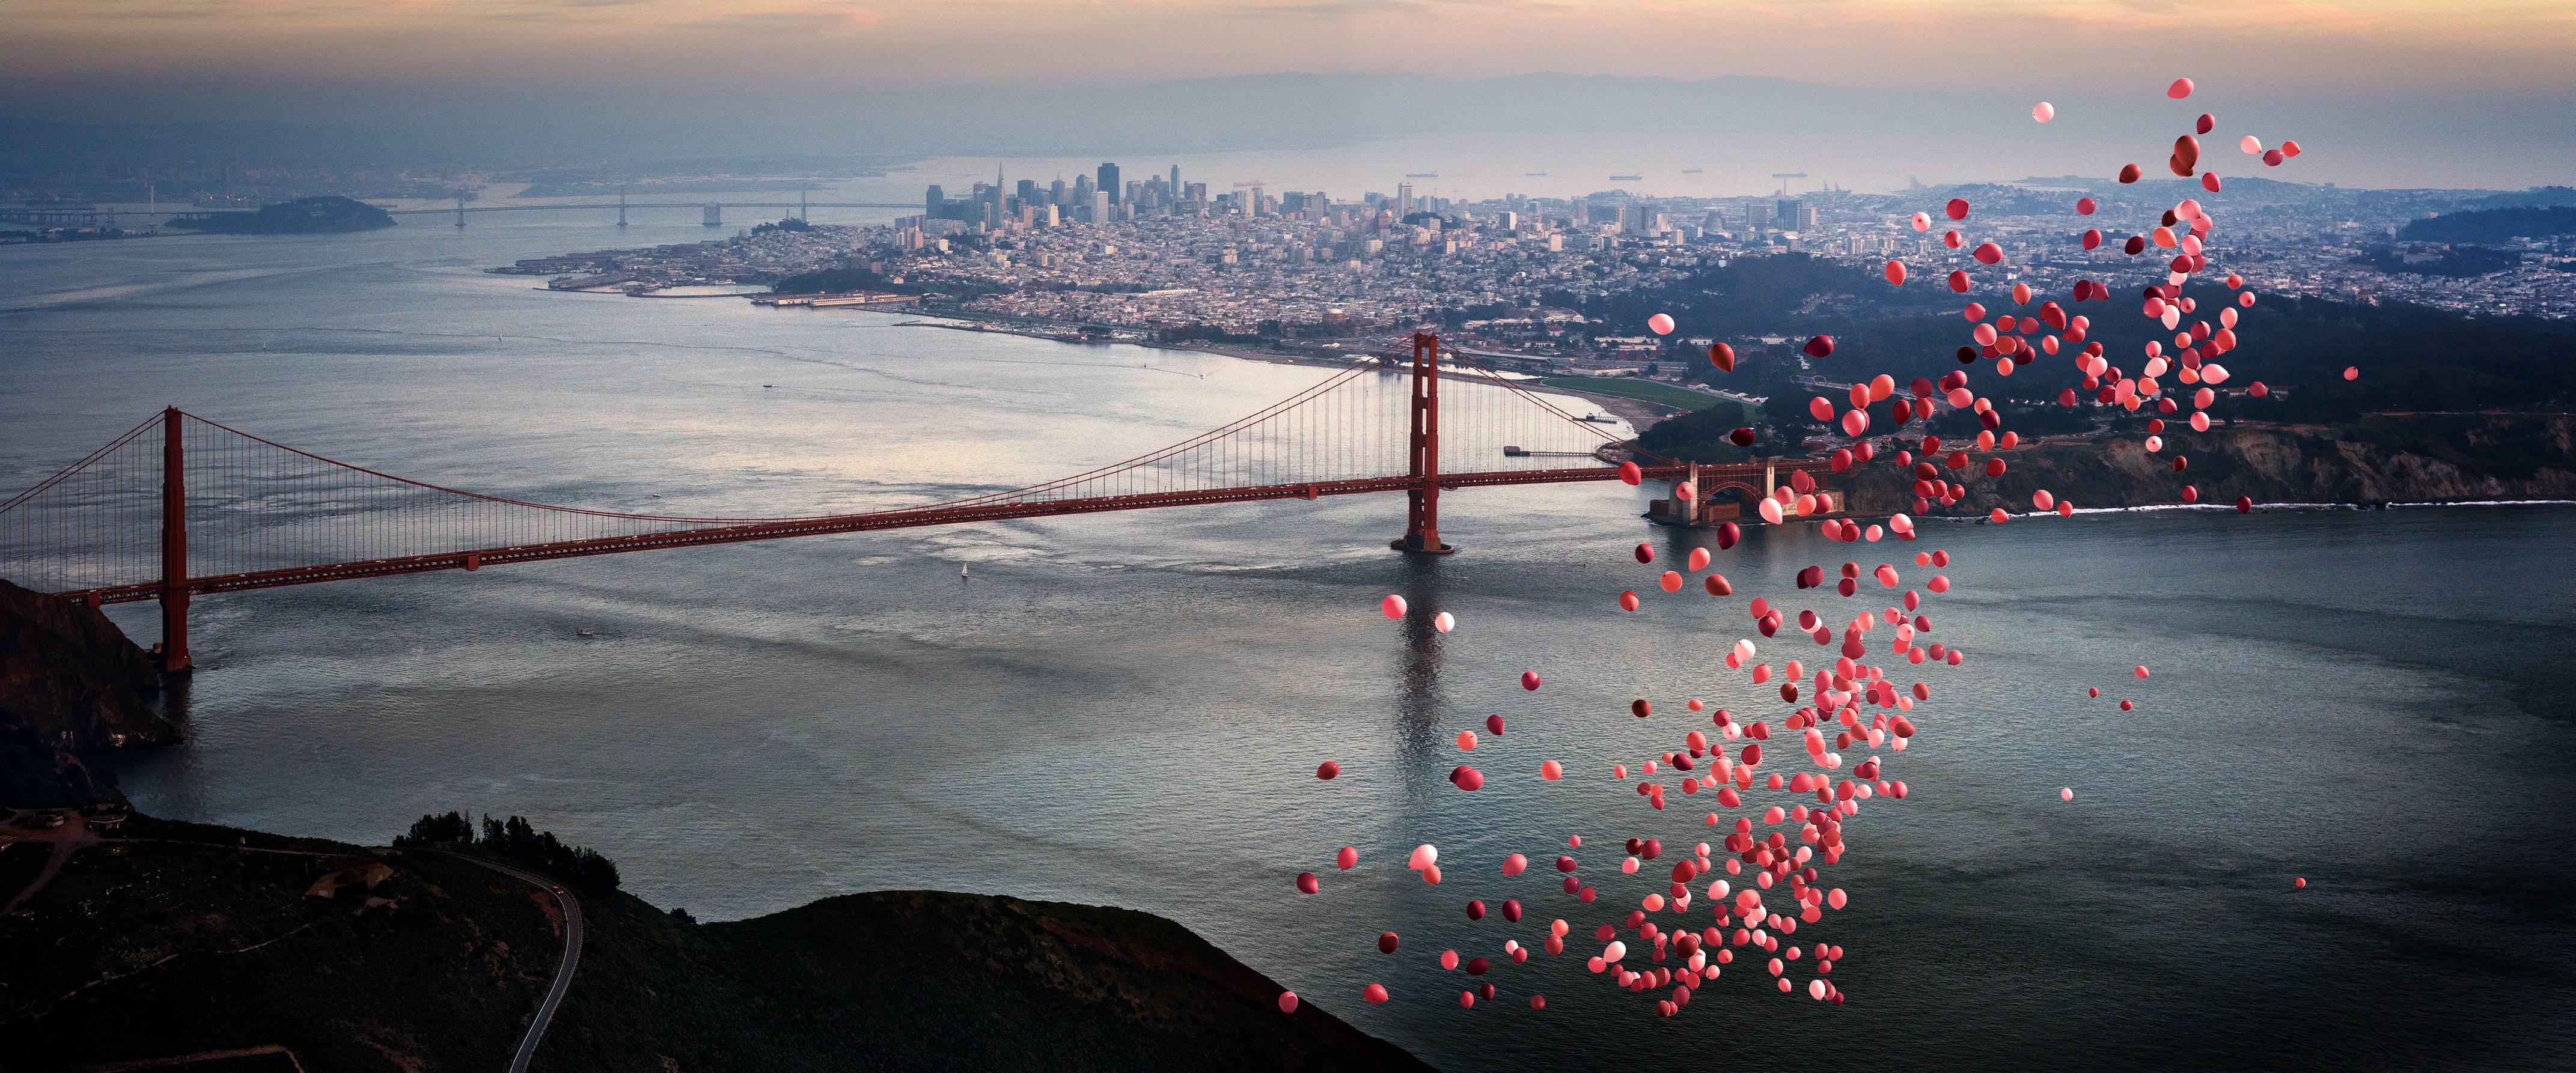 David Drebin Landscape Photograph - Balloons over San Francisco